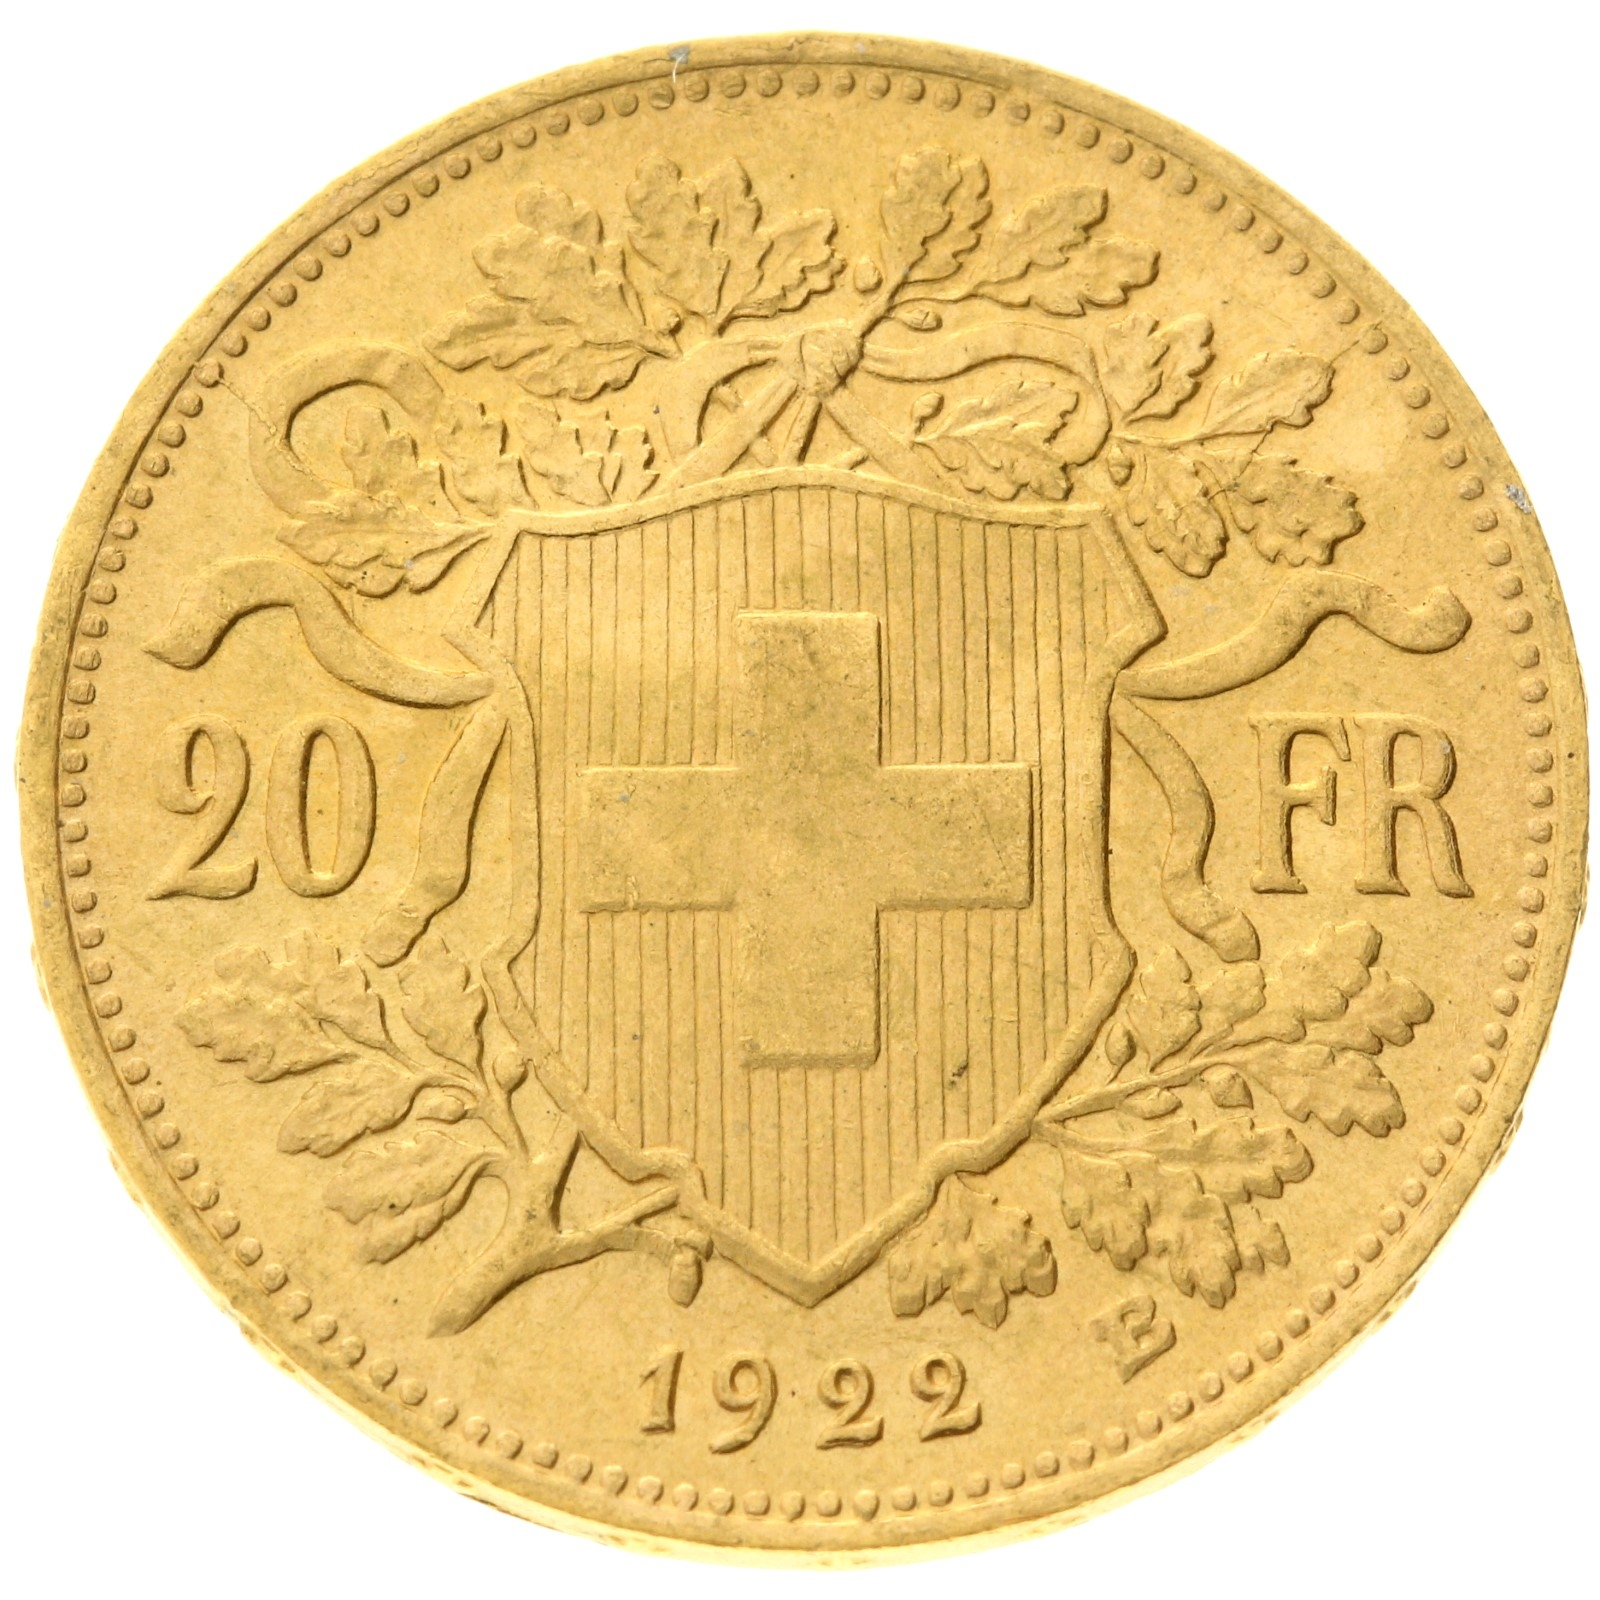 Switzerland - 20 francs - 1922